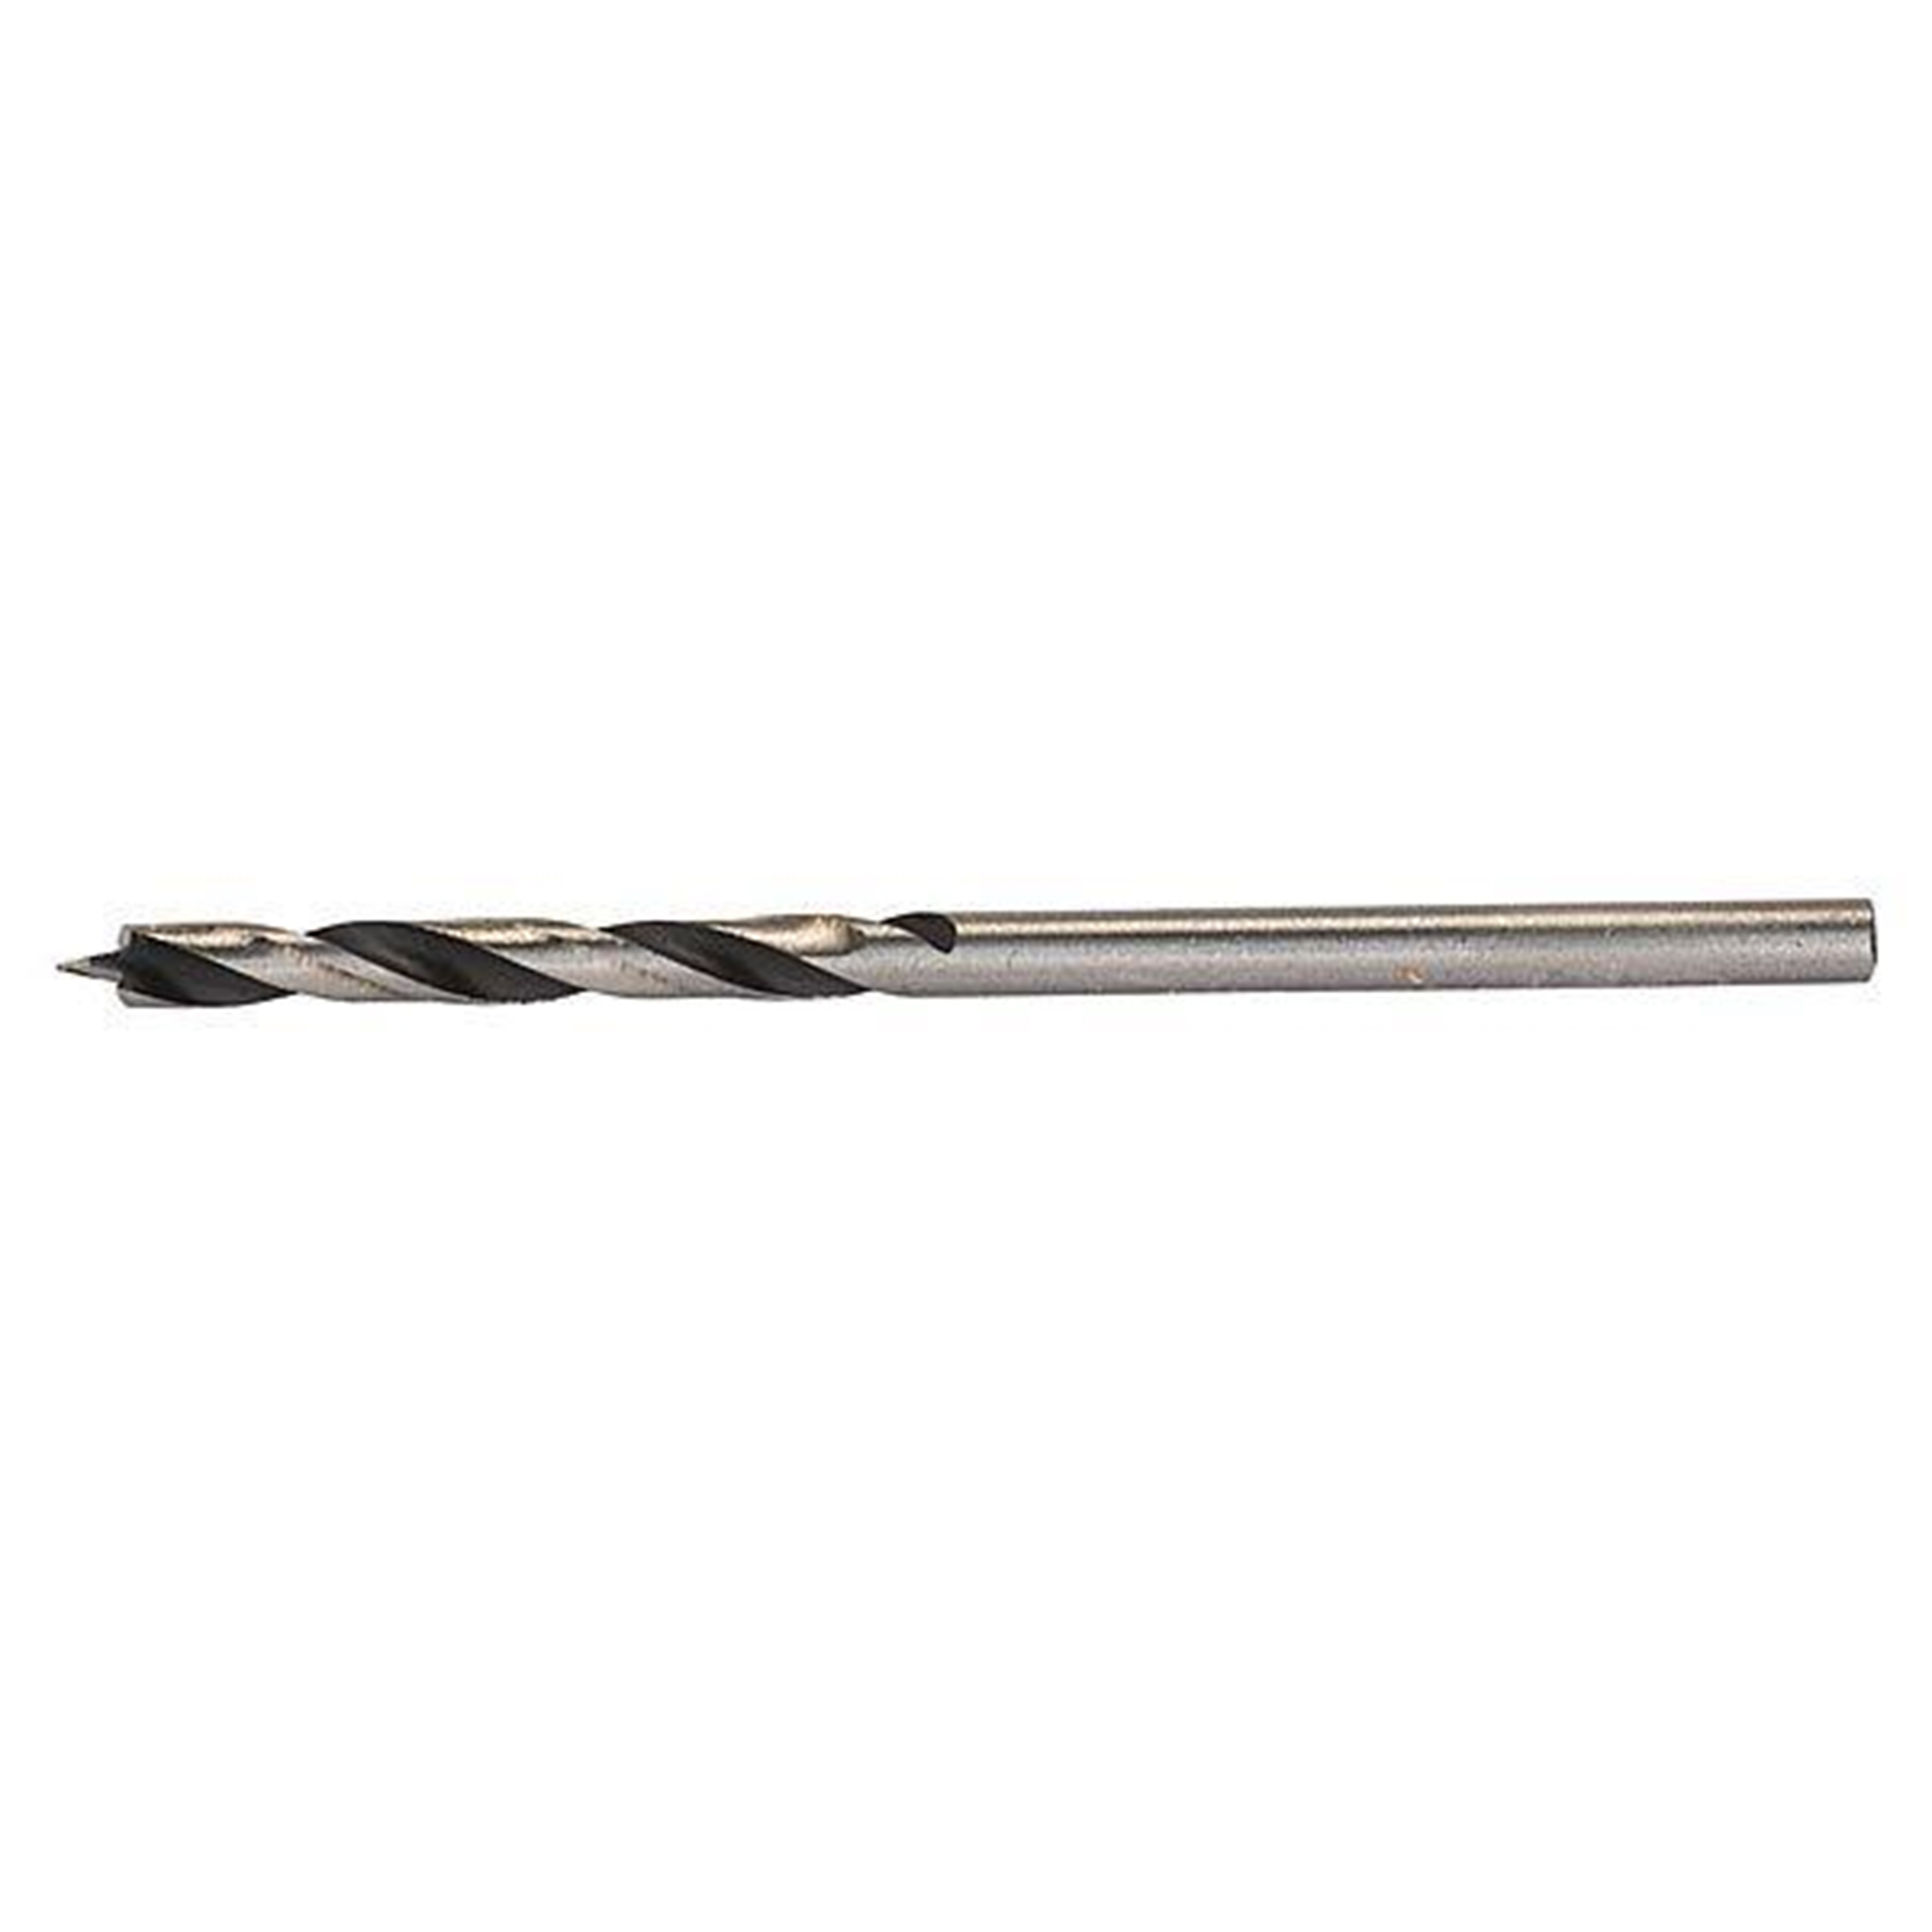 3mm Chrome-vanadium Steel Brad Point Drill Bit